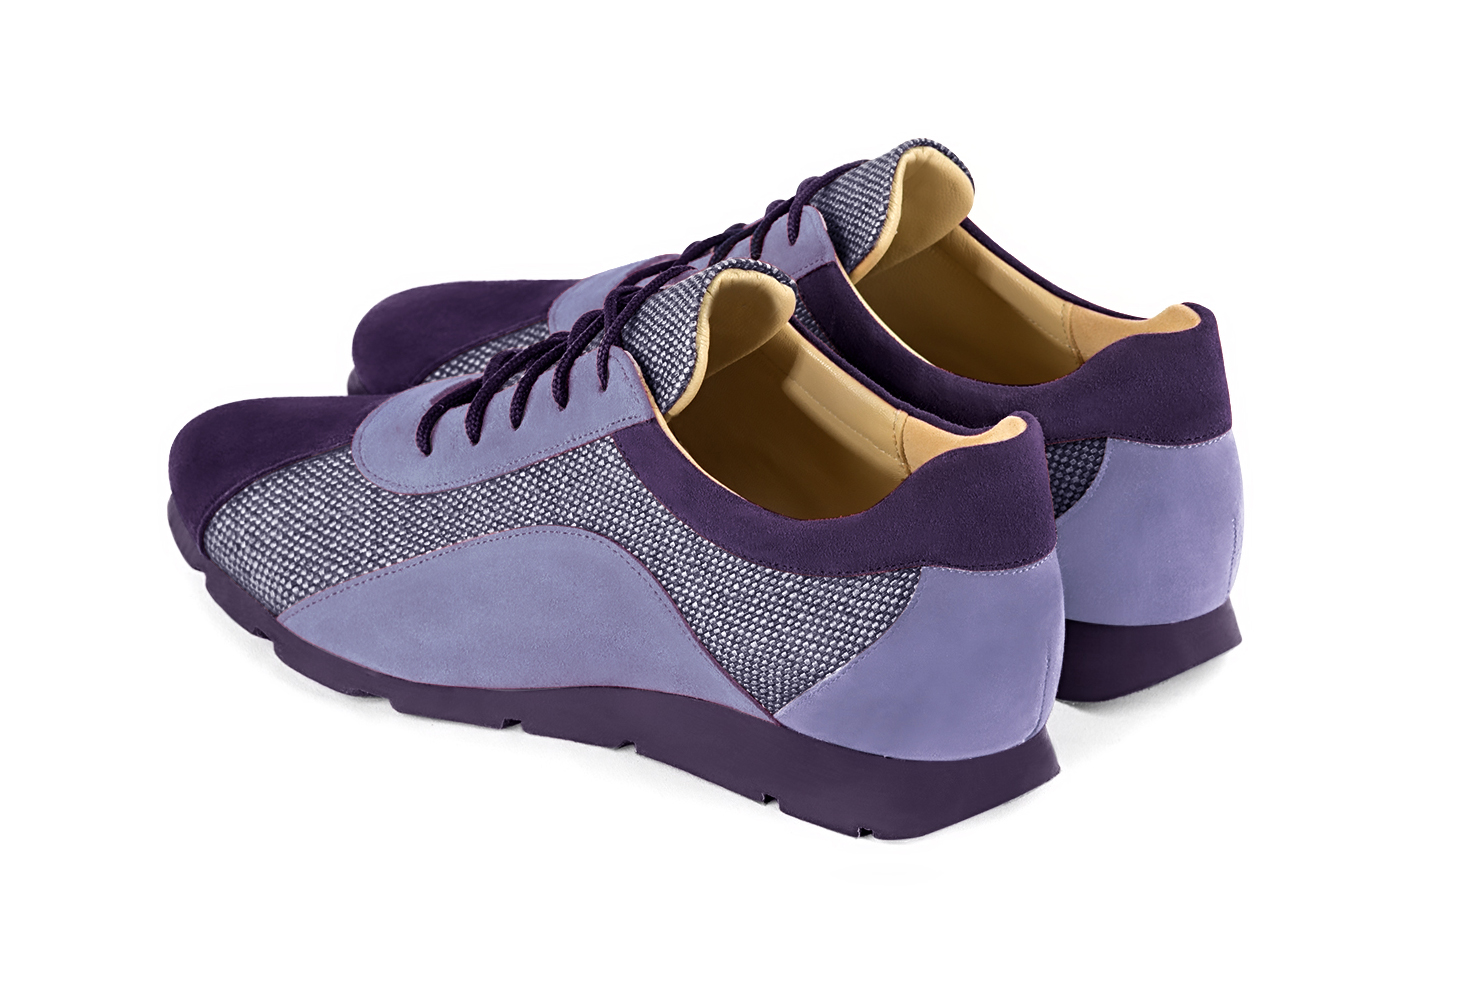 Lavender purple women's open back shoes. Round toe. Flat rubber soles. Rear view - Florence KOOIJMAN